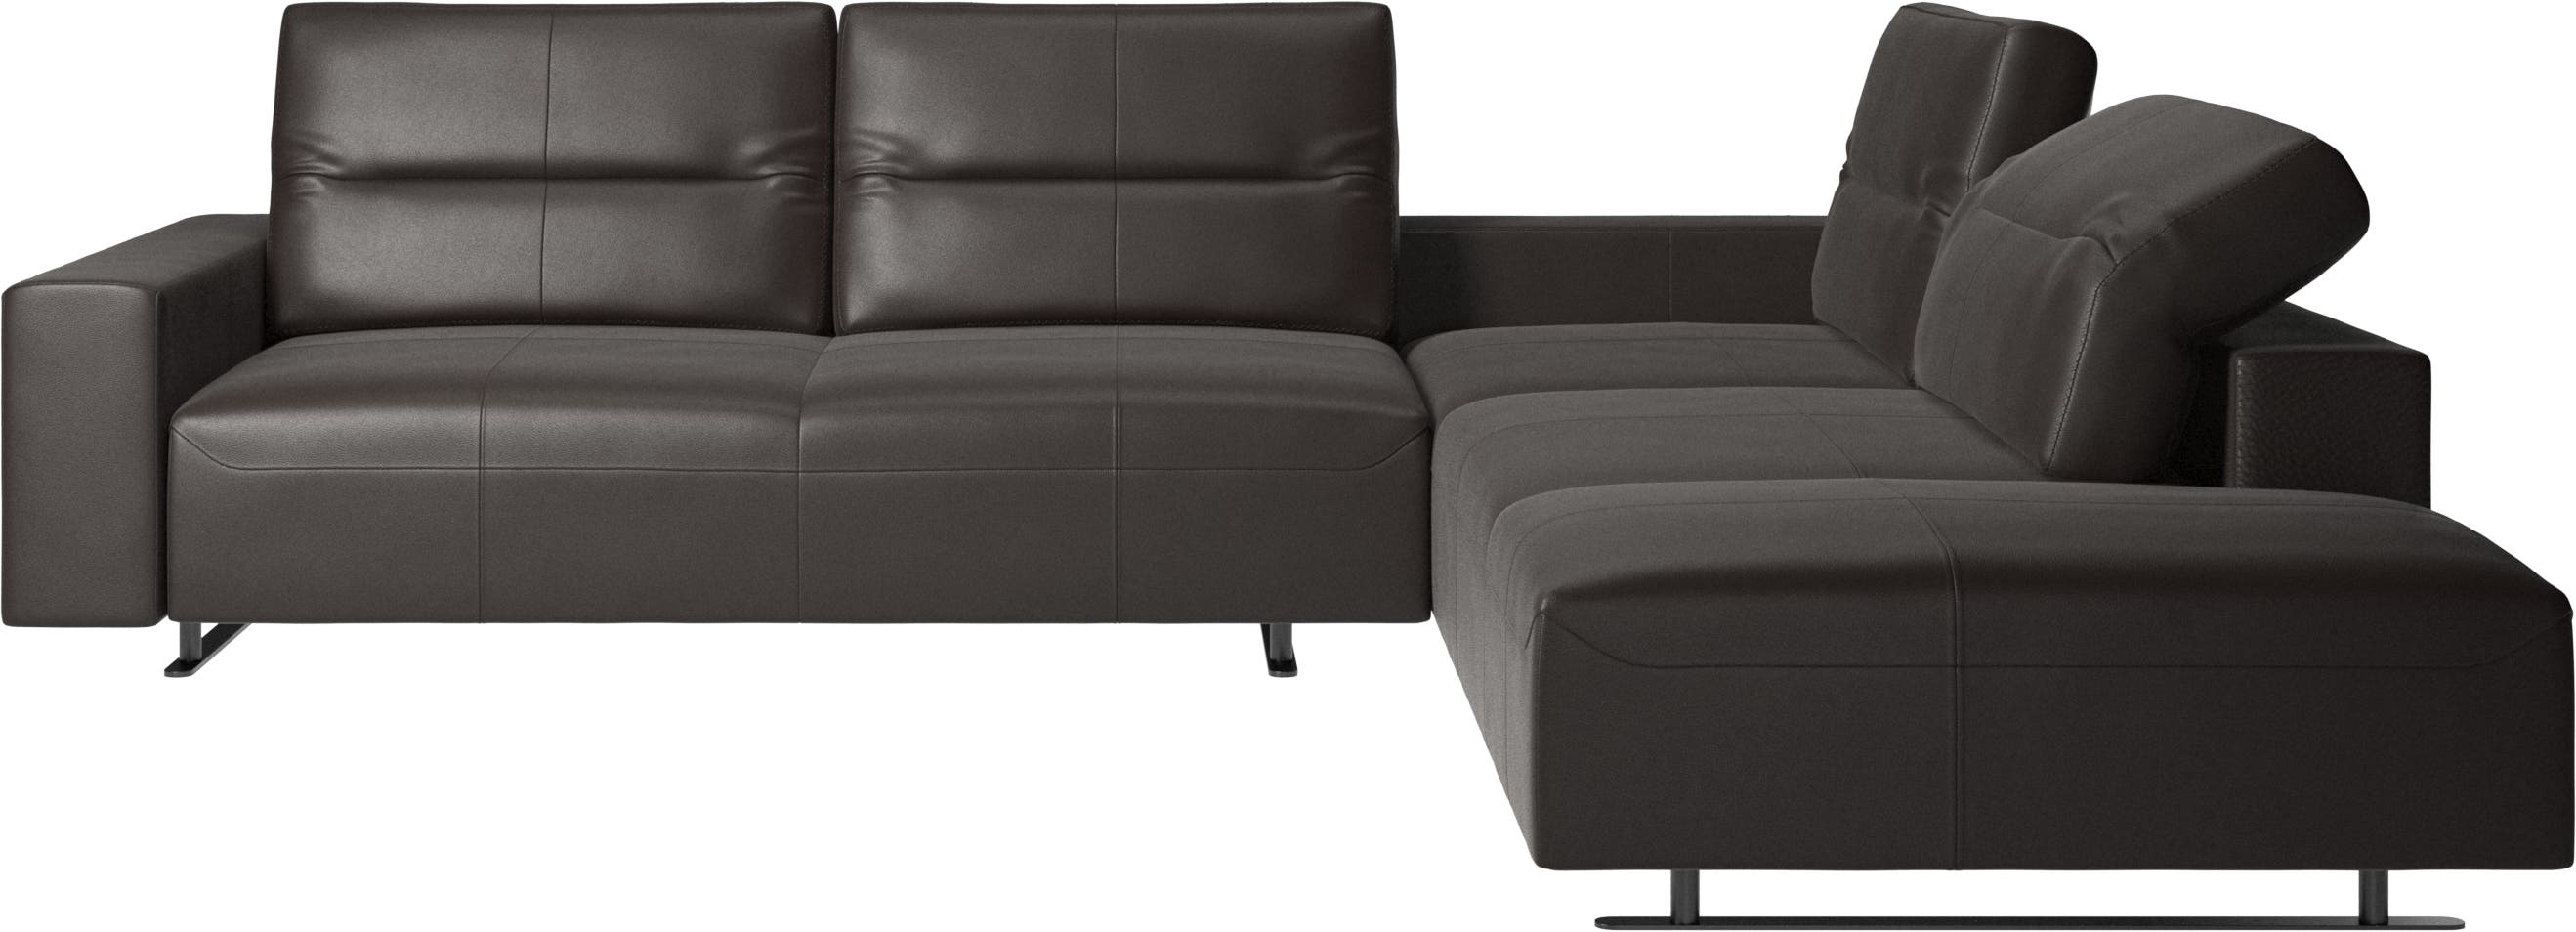 Hampton corner sofa with adjustable back and lounging unit